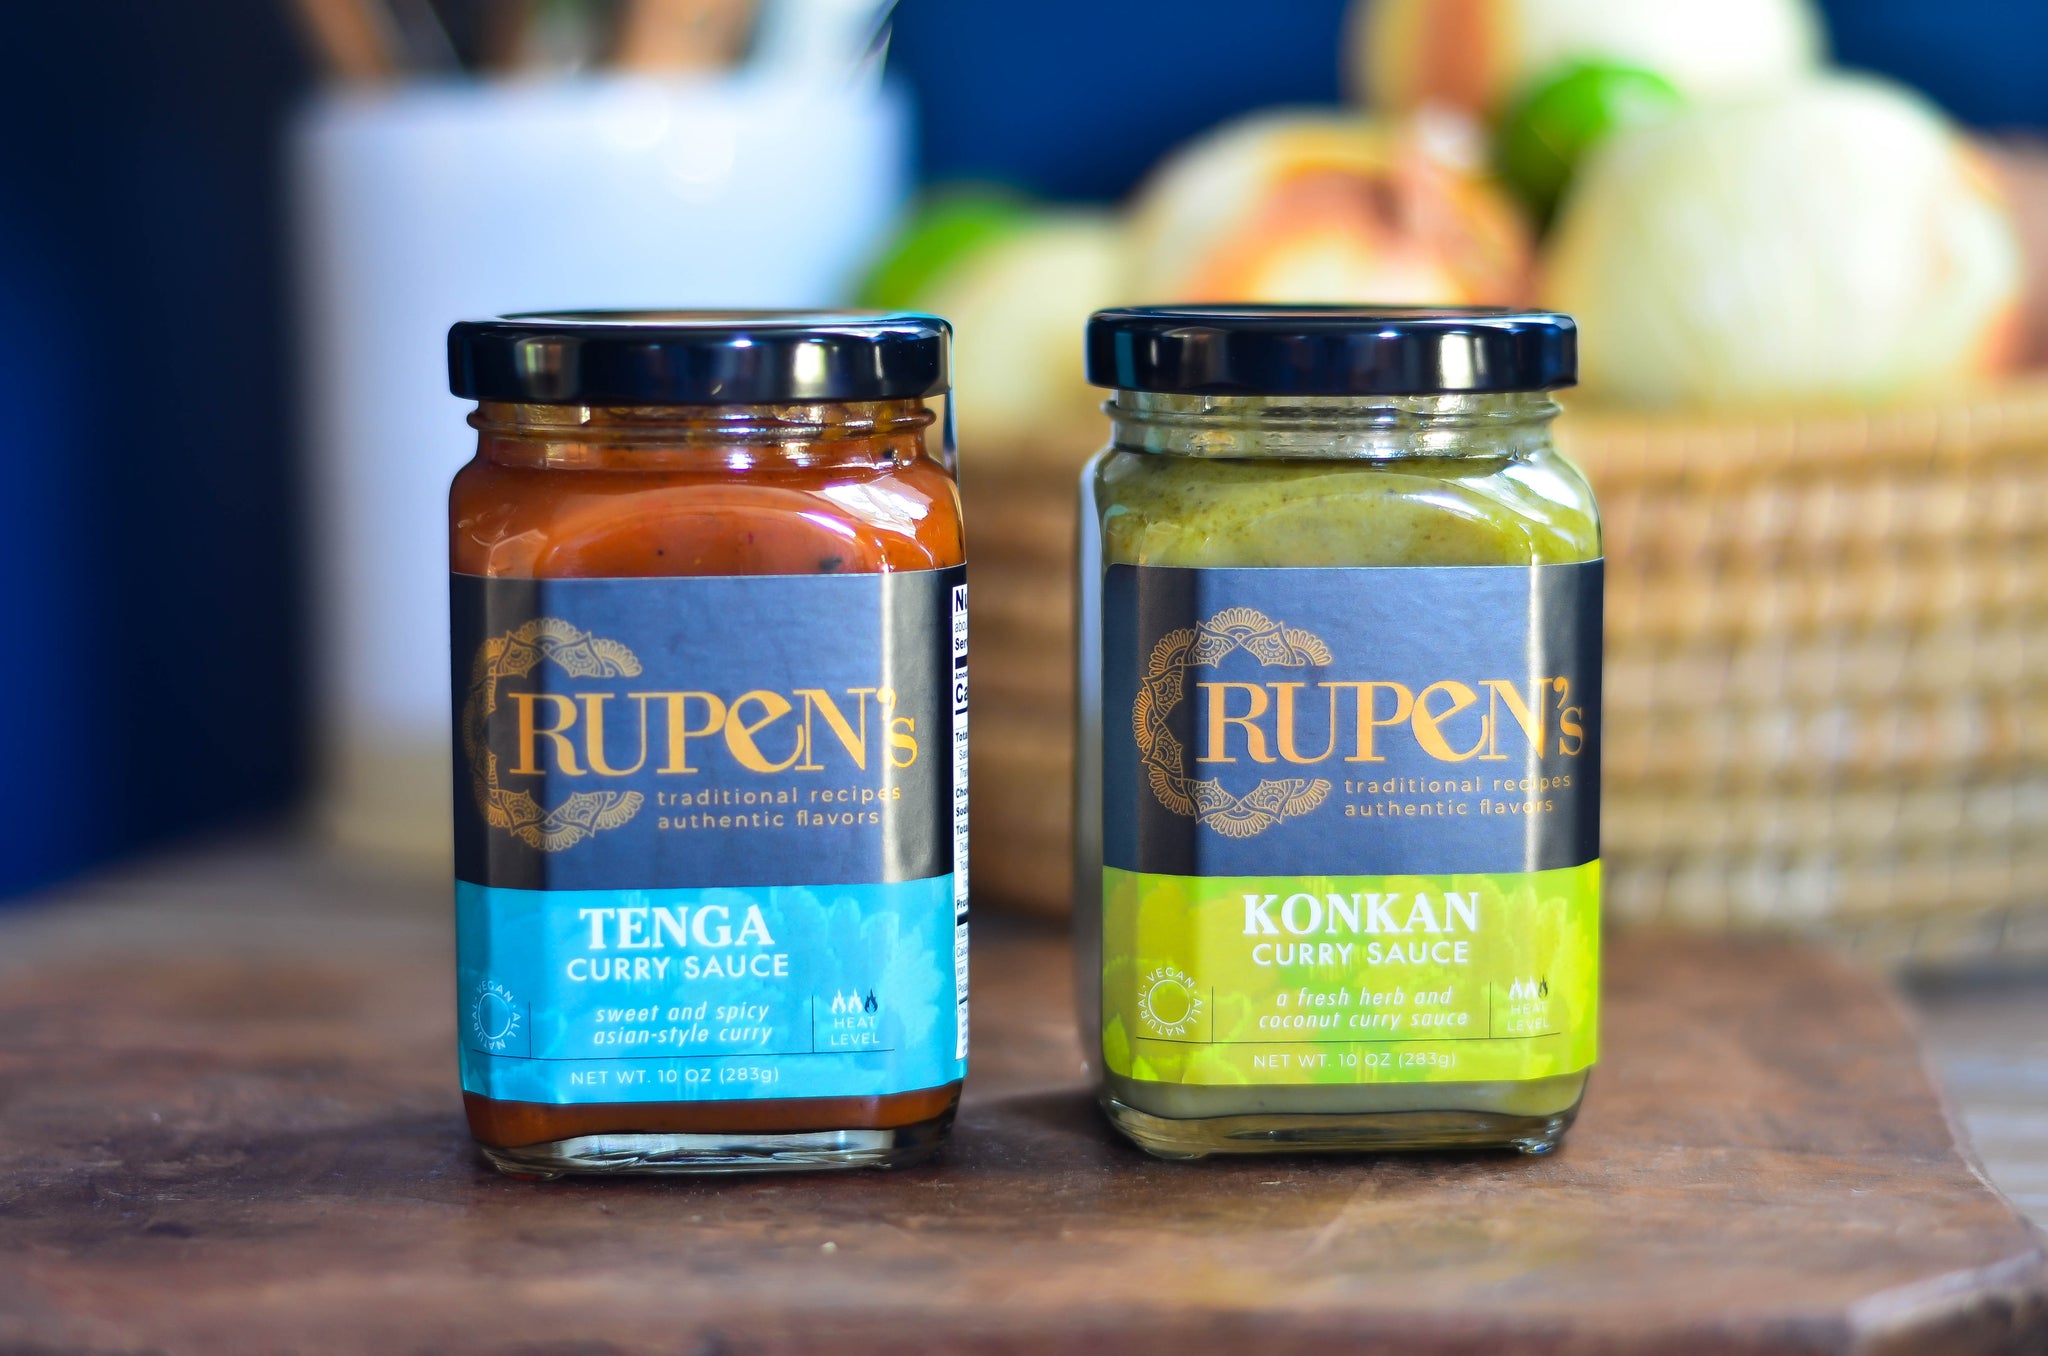 New Curry Sauces: KONKAN and TENGA